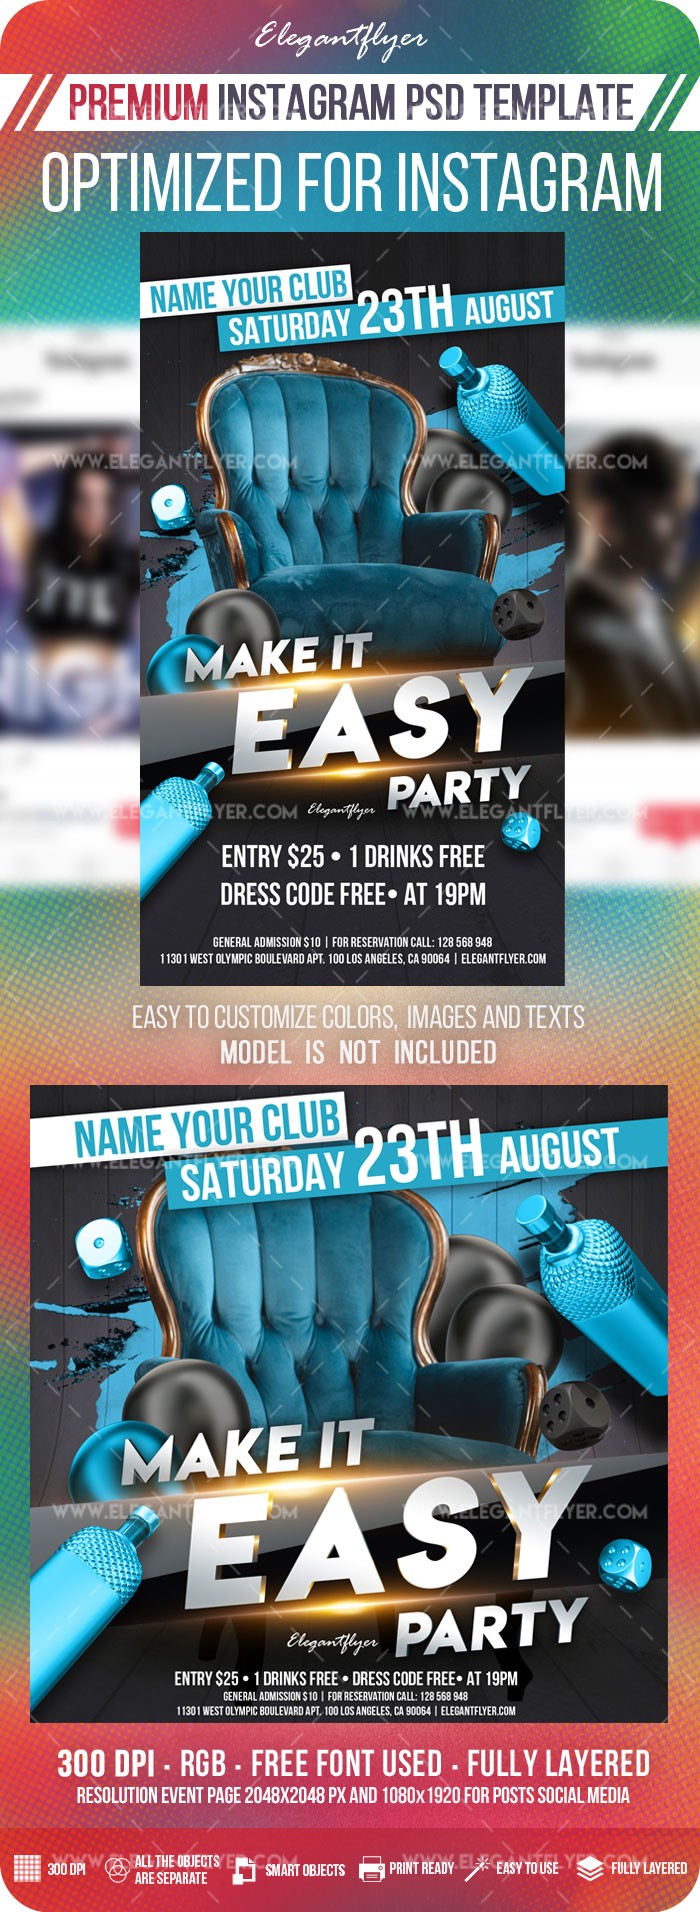 Make it Easy Party Instagram by ElegantFlyer